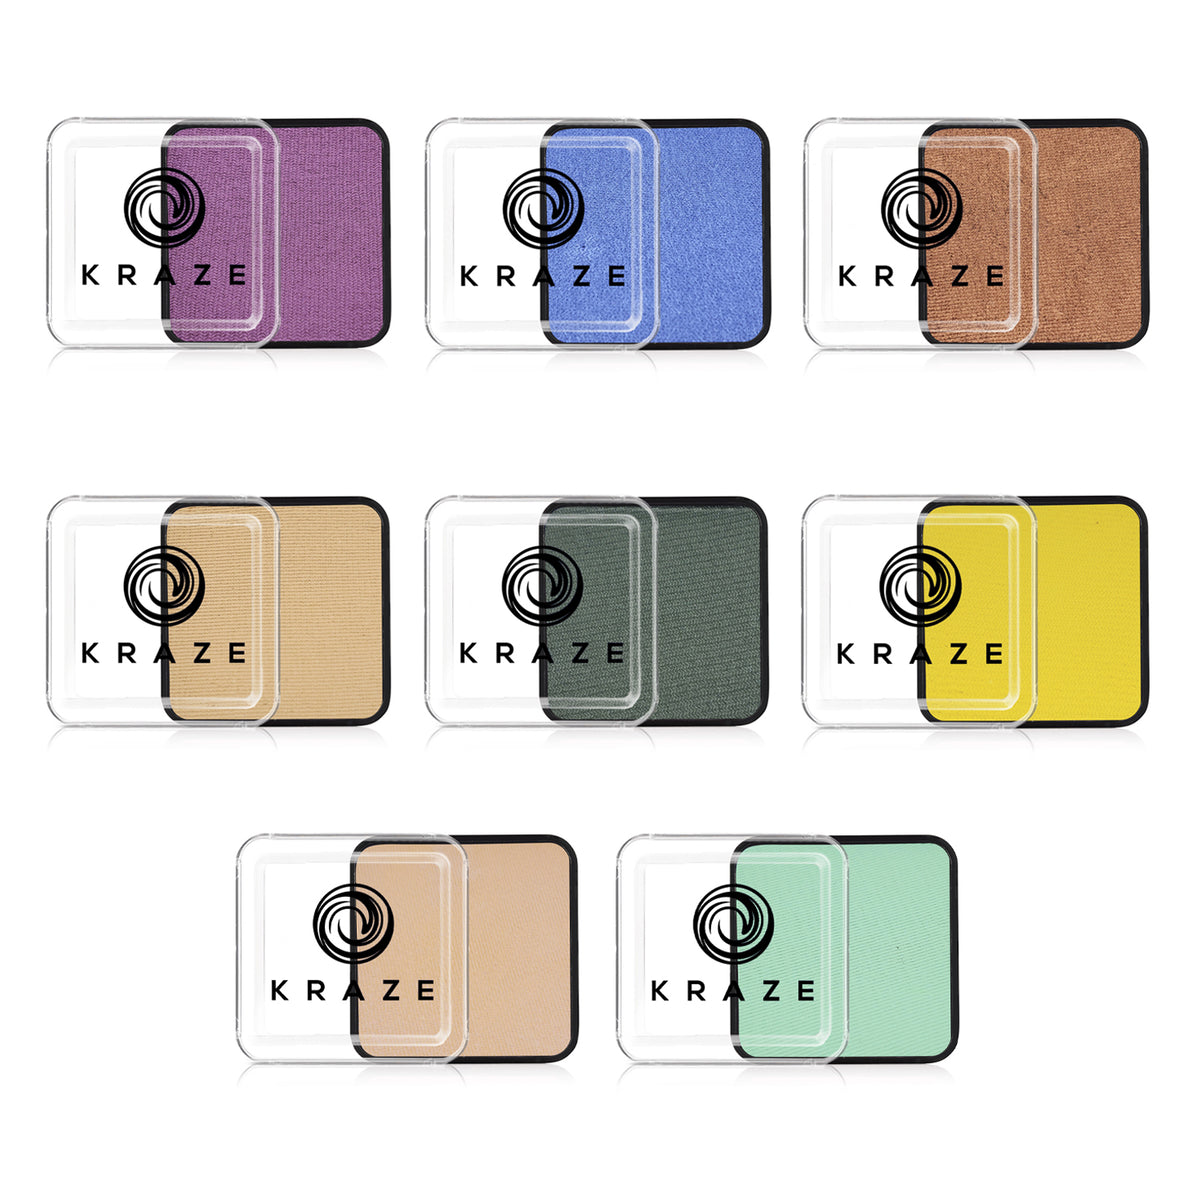 Kraze Square Face Paint Value Pack (Set of 8, 25 gm each)